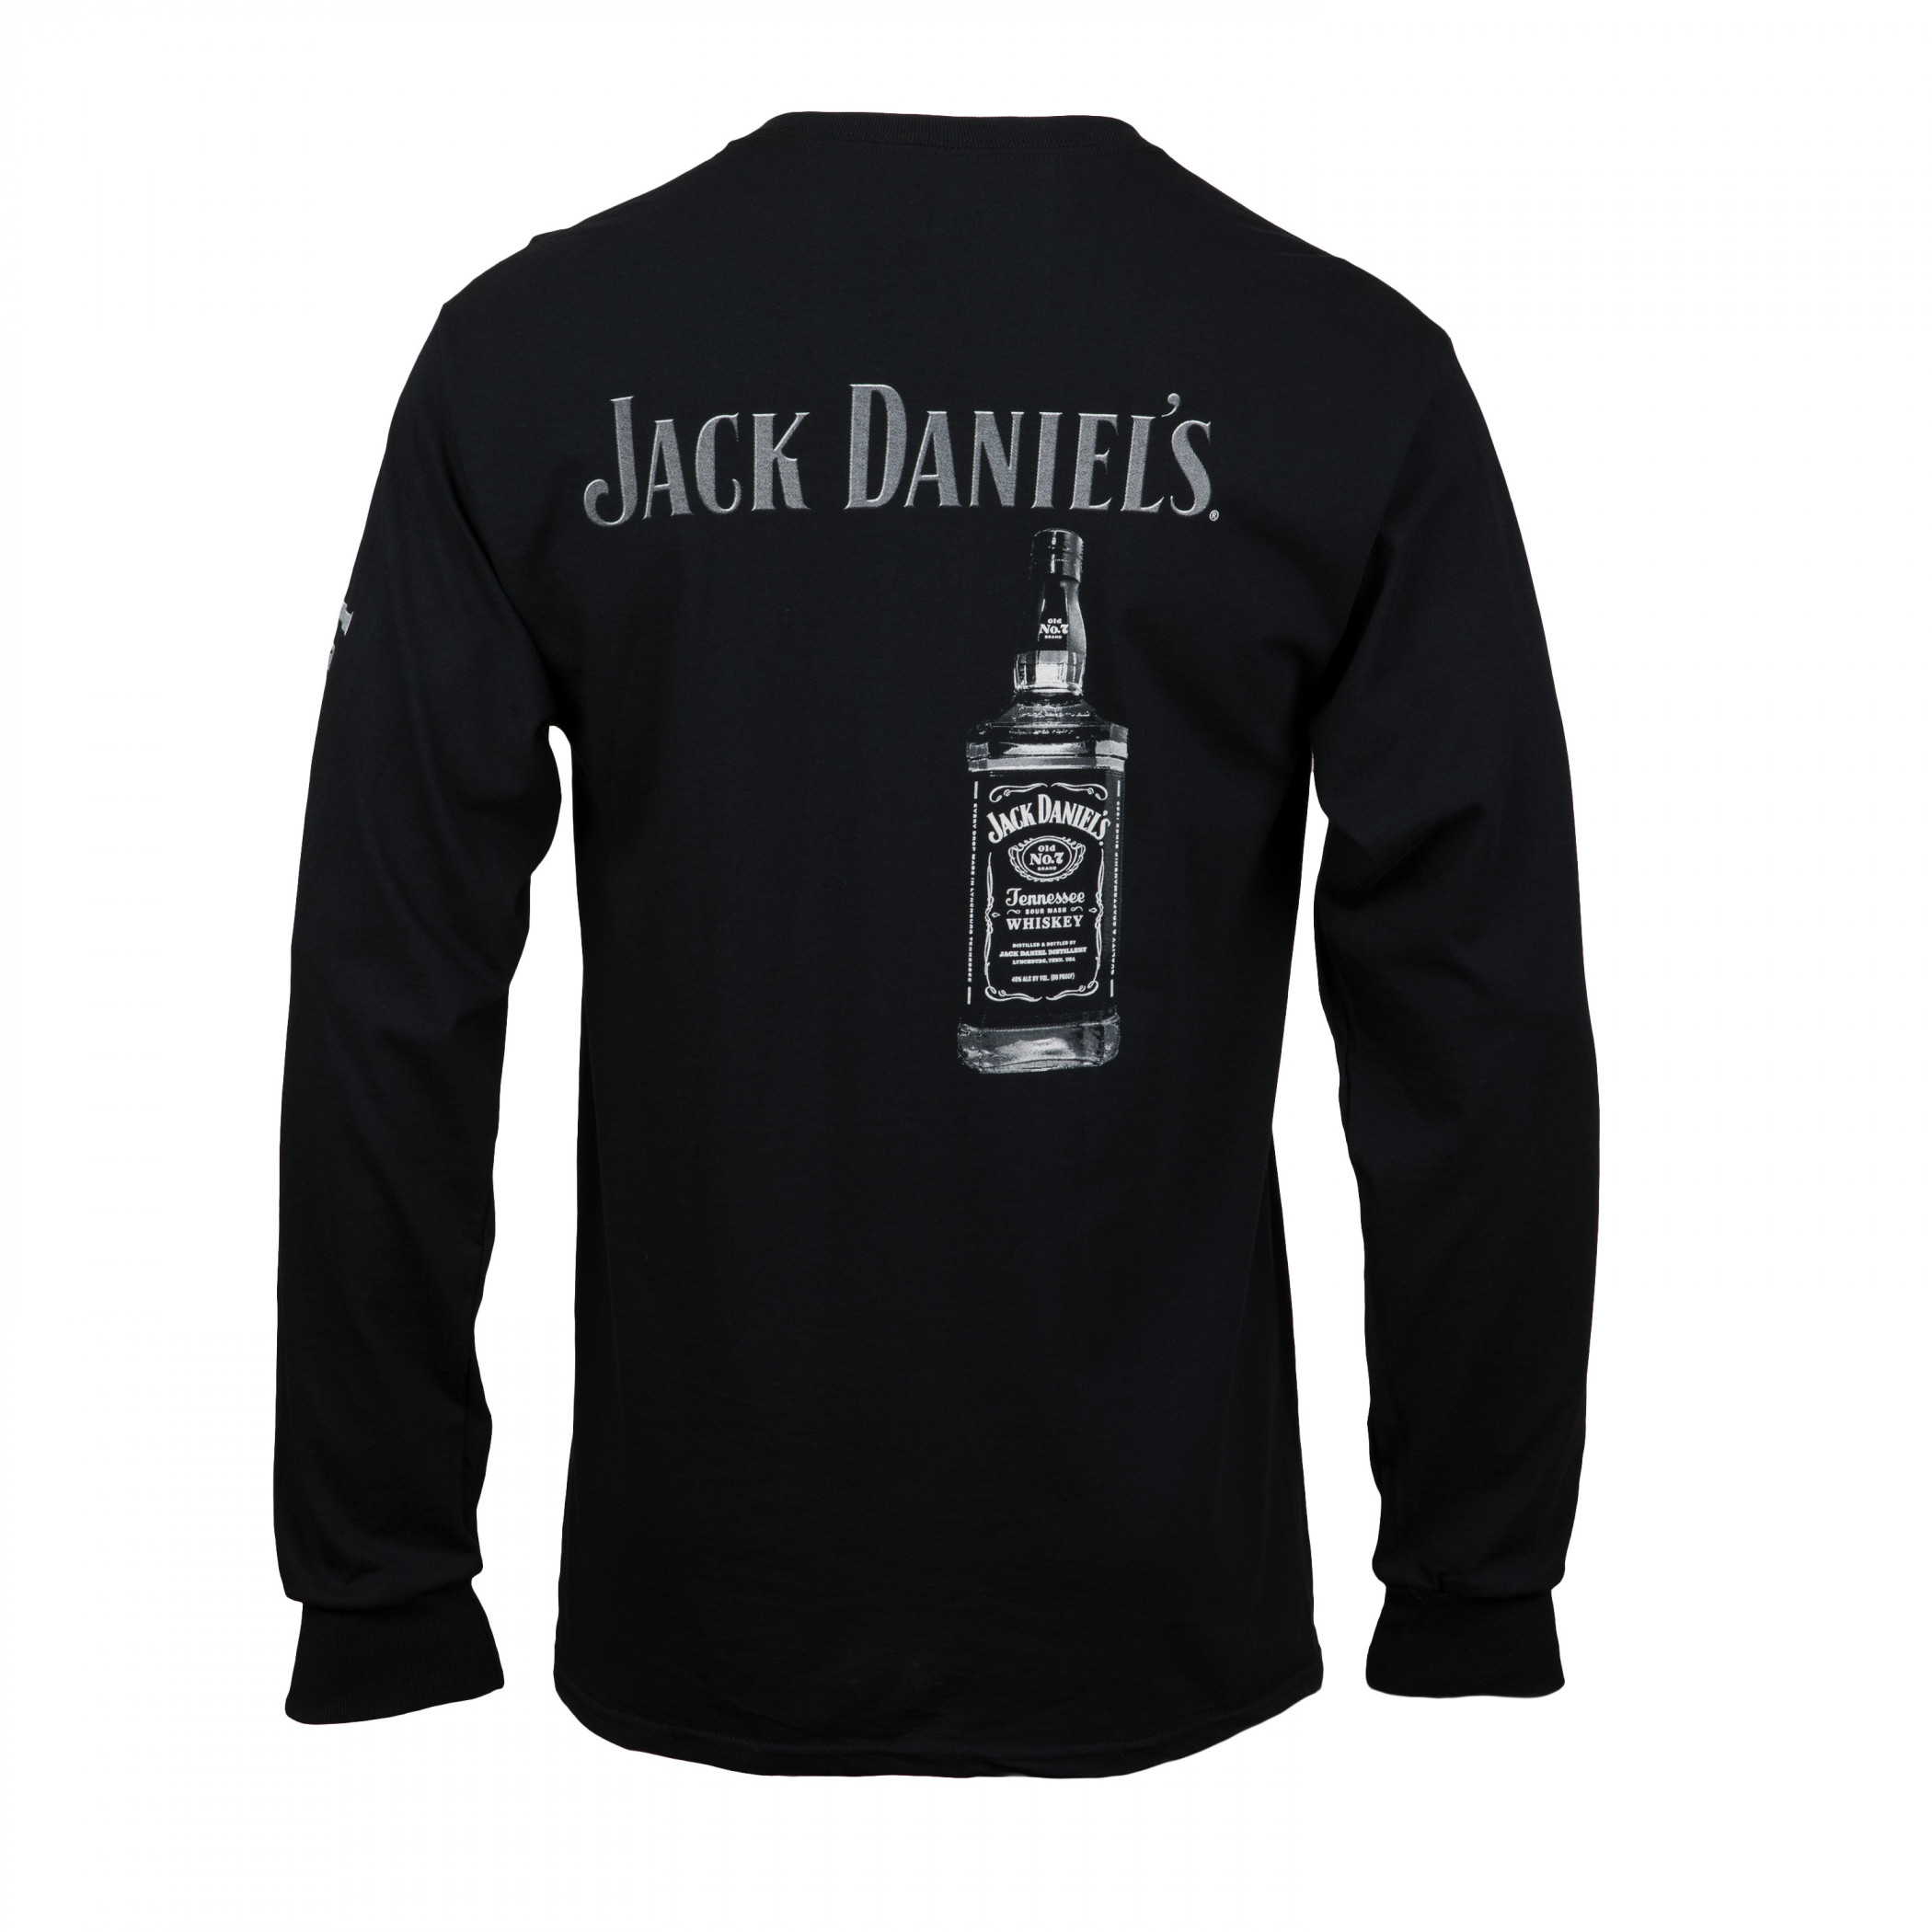 Jack Daniels Bottle Black Long Sleeve Tee Shirt